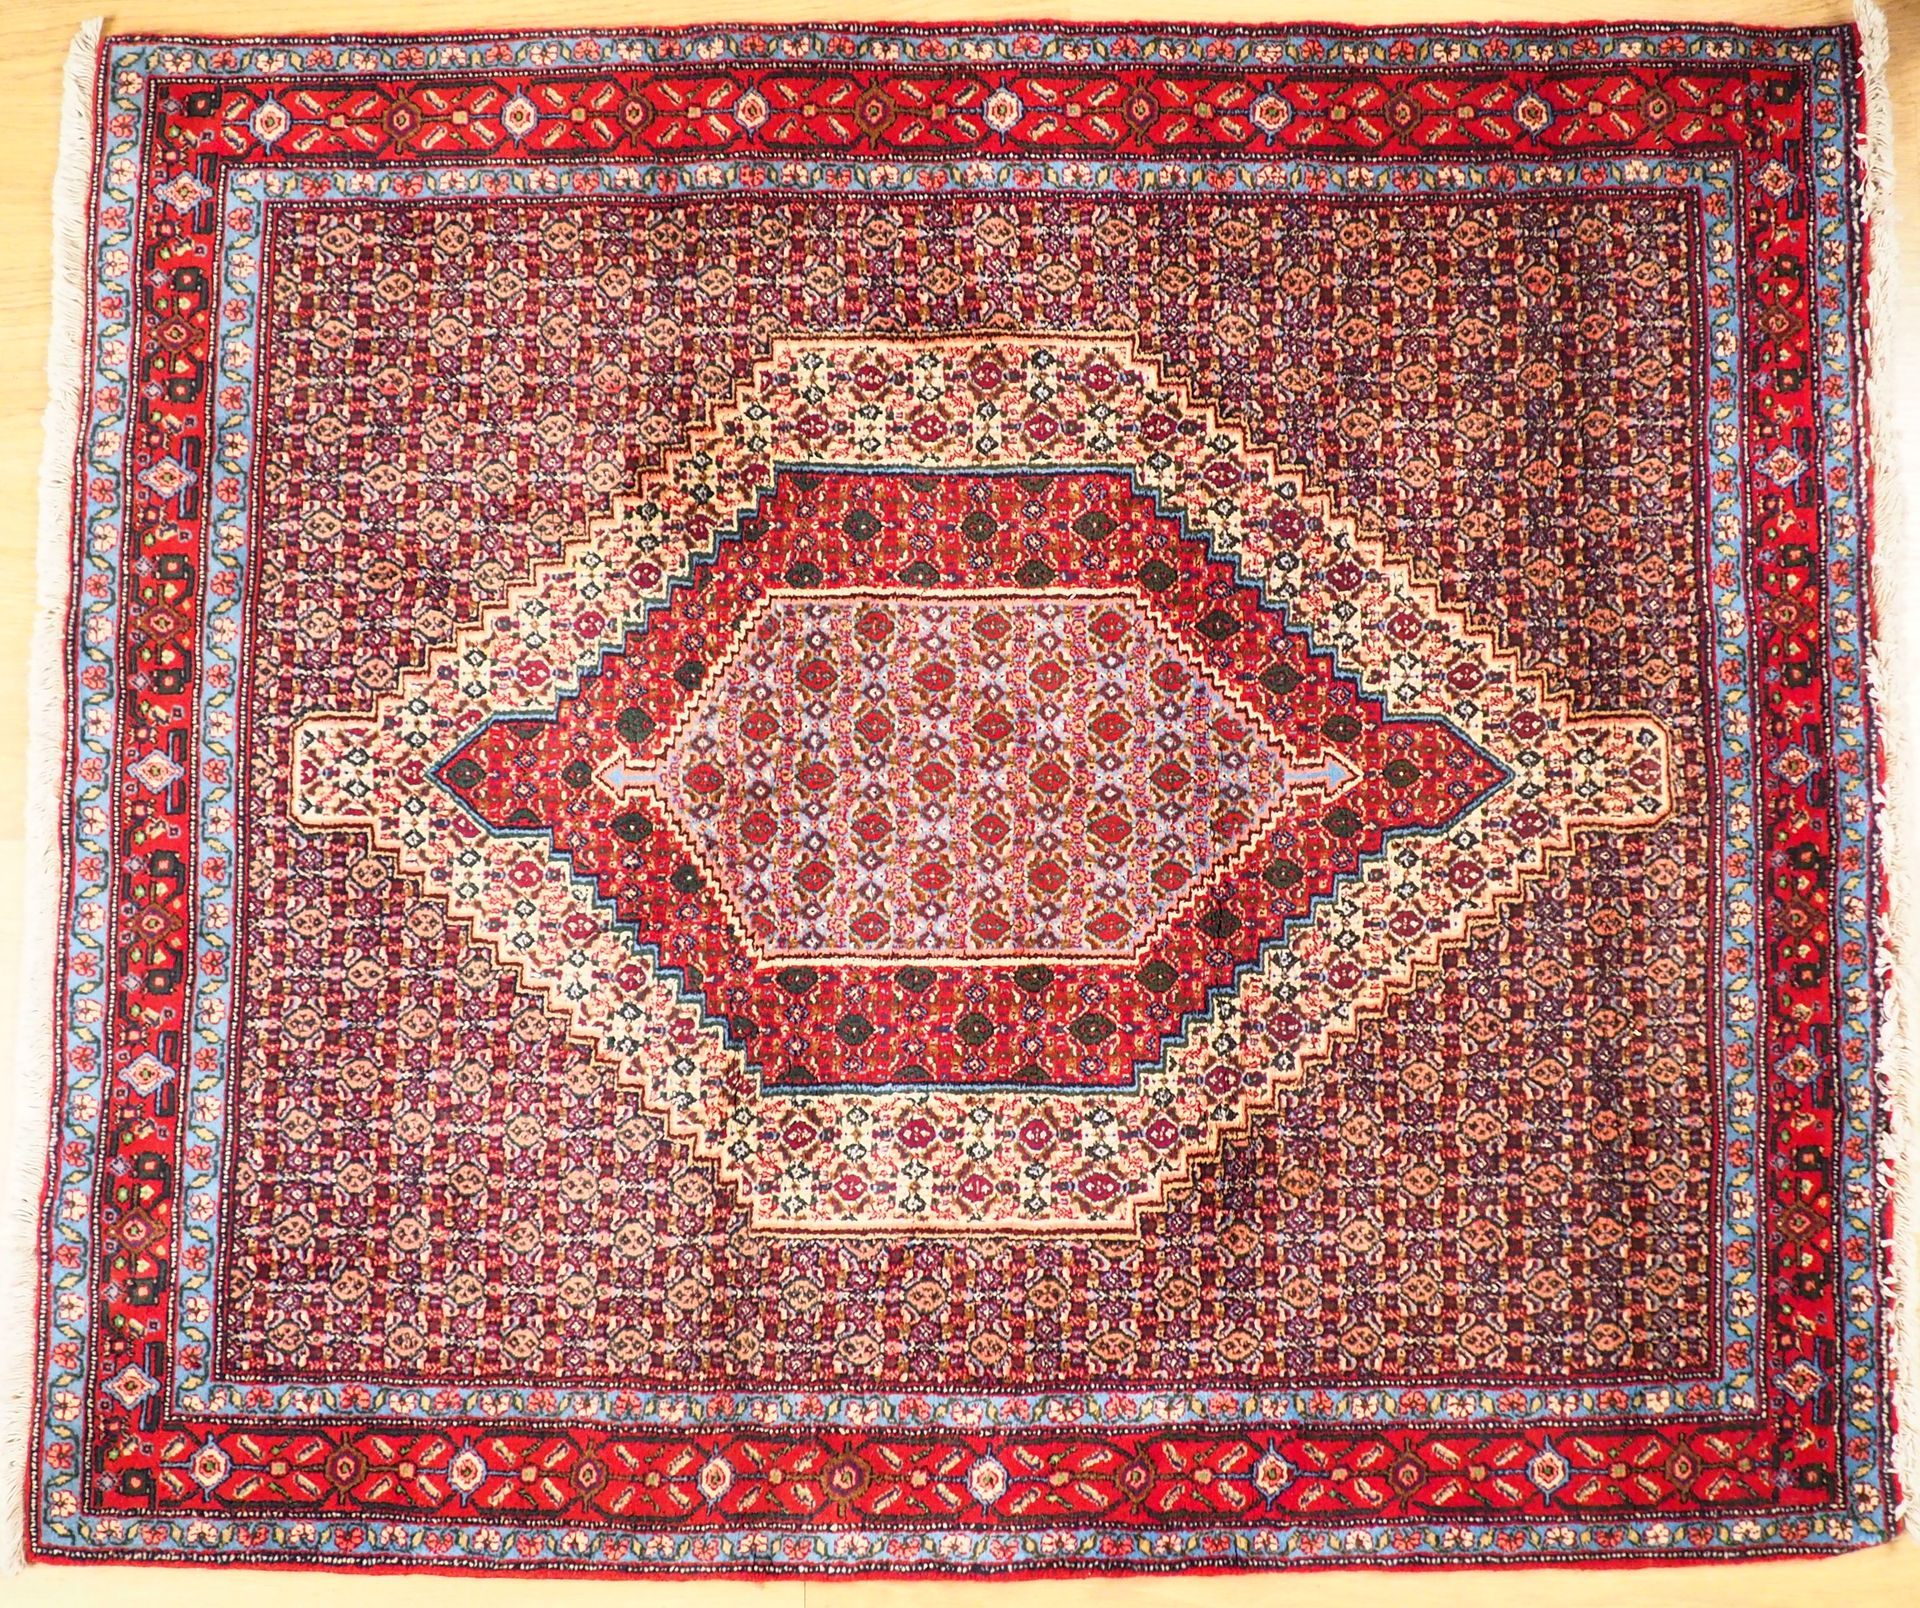 Null 羊毛祈祷毯，在红色背景上装饰有几何图案和楣条。

尺寸144 x 124厘米